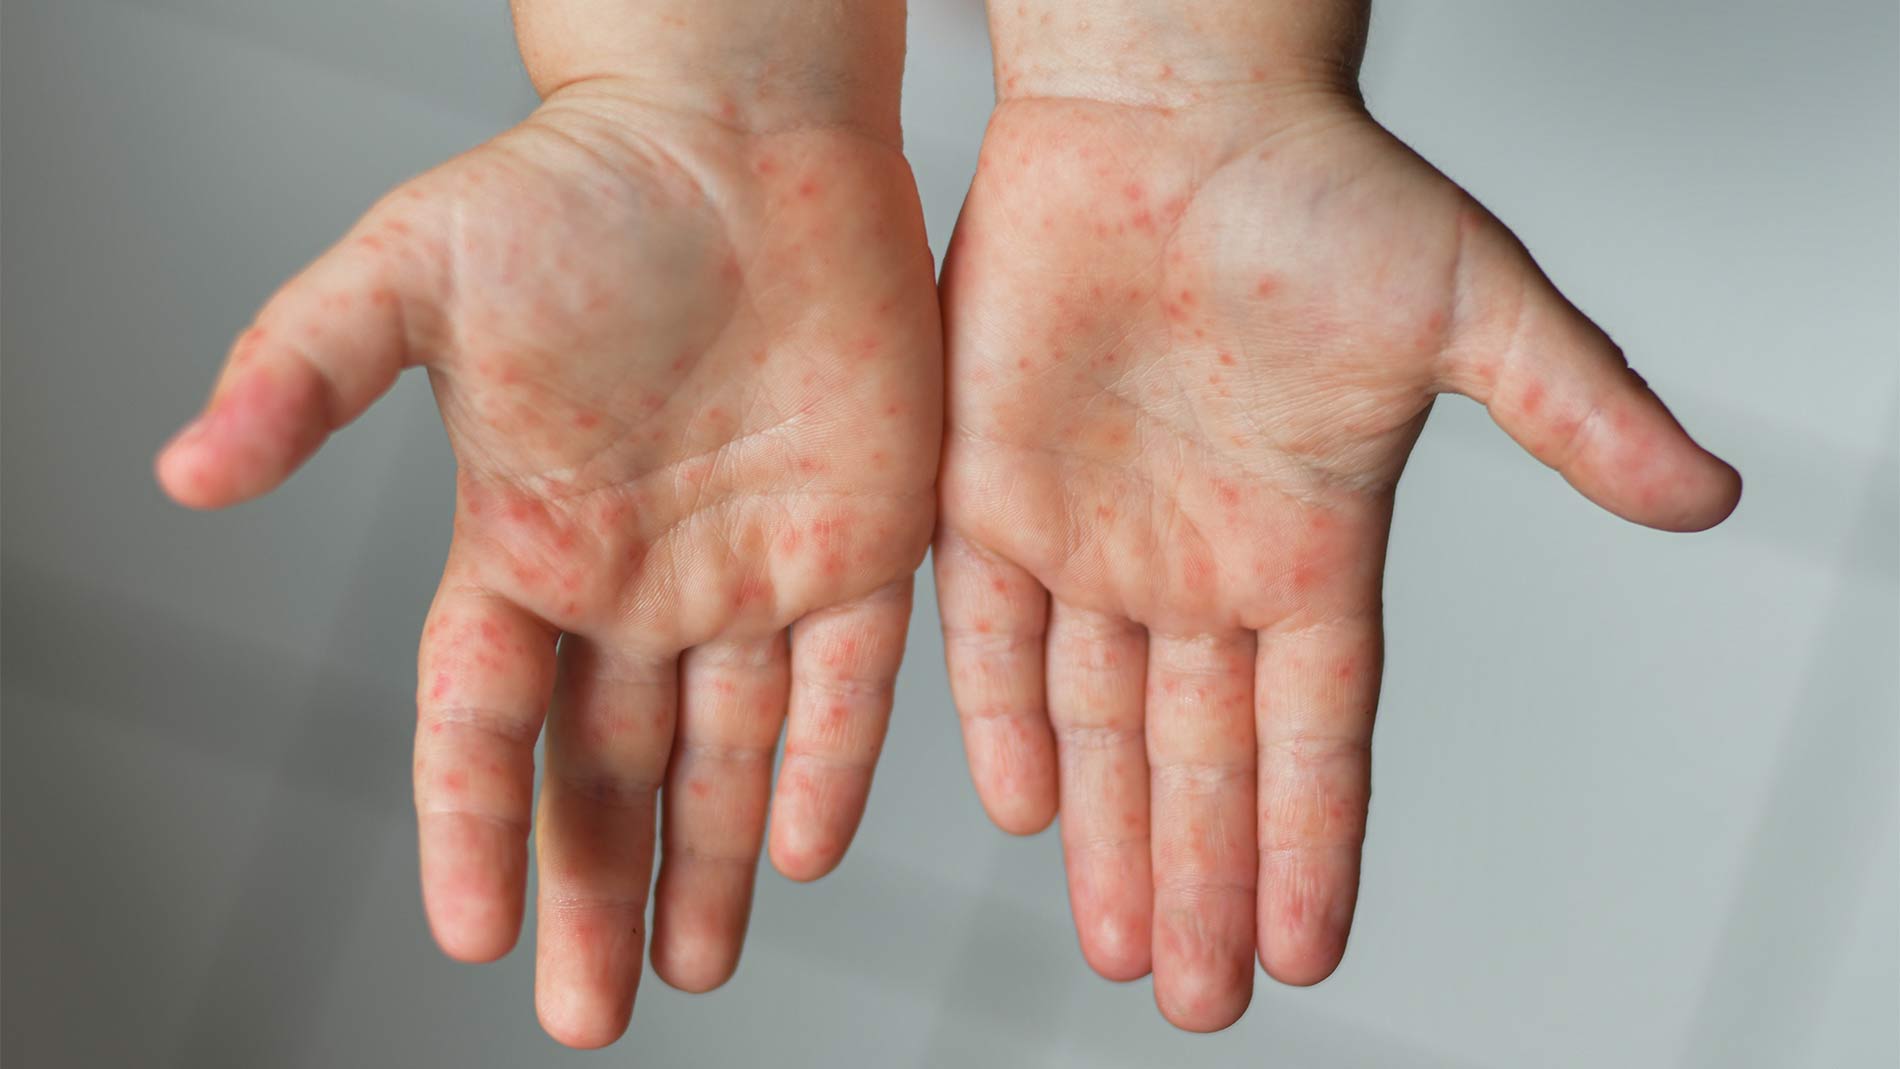 How to treat hand eczema